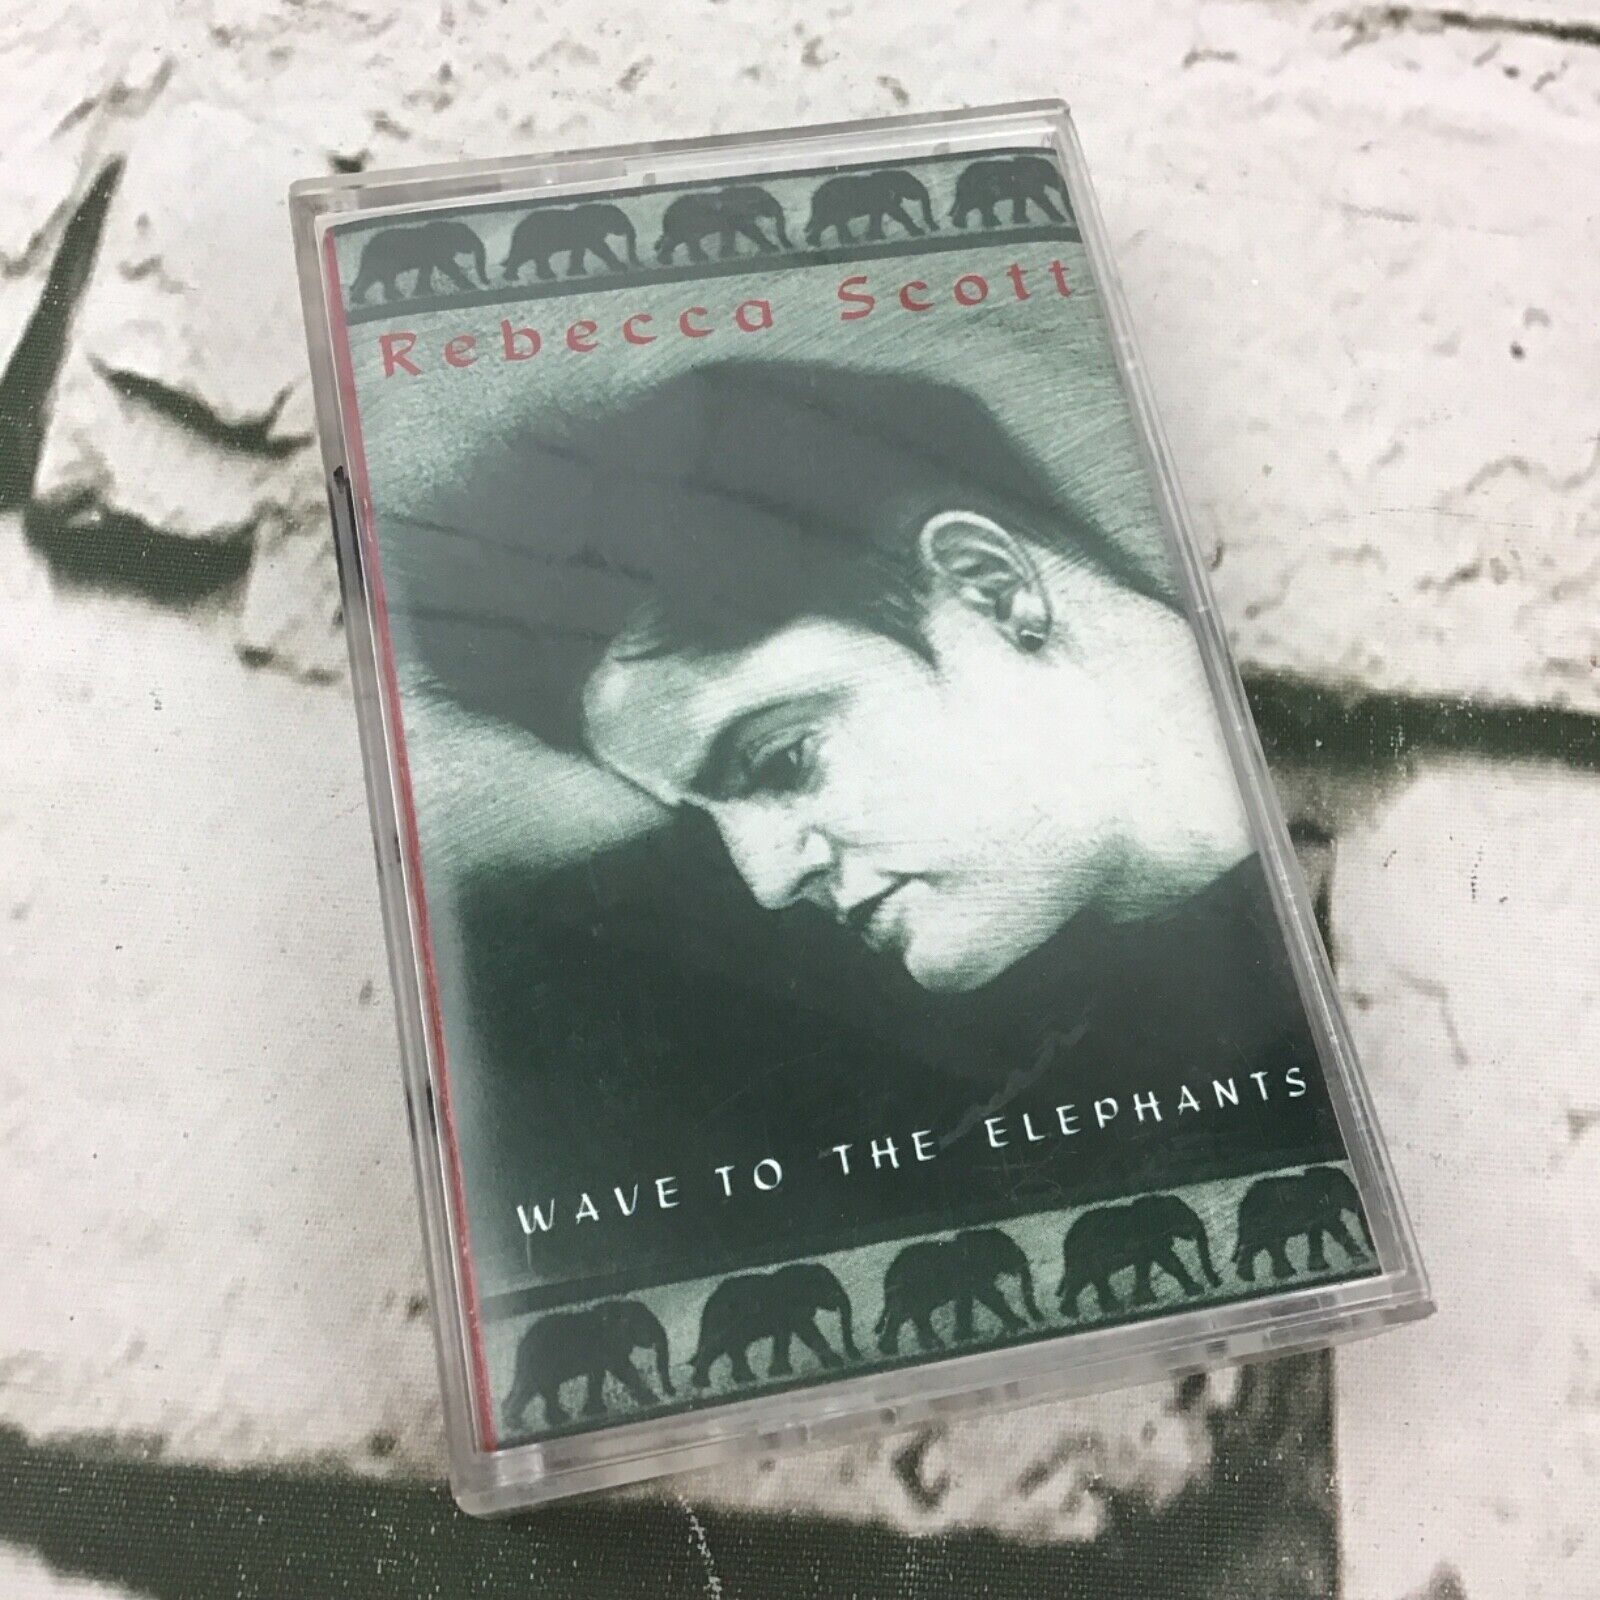 Rebecca Scott Wave To The Elephants Cassette Tape Vintage 1994